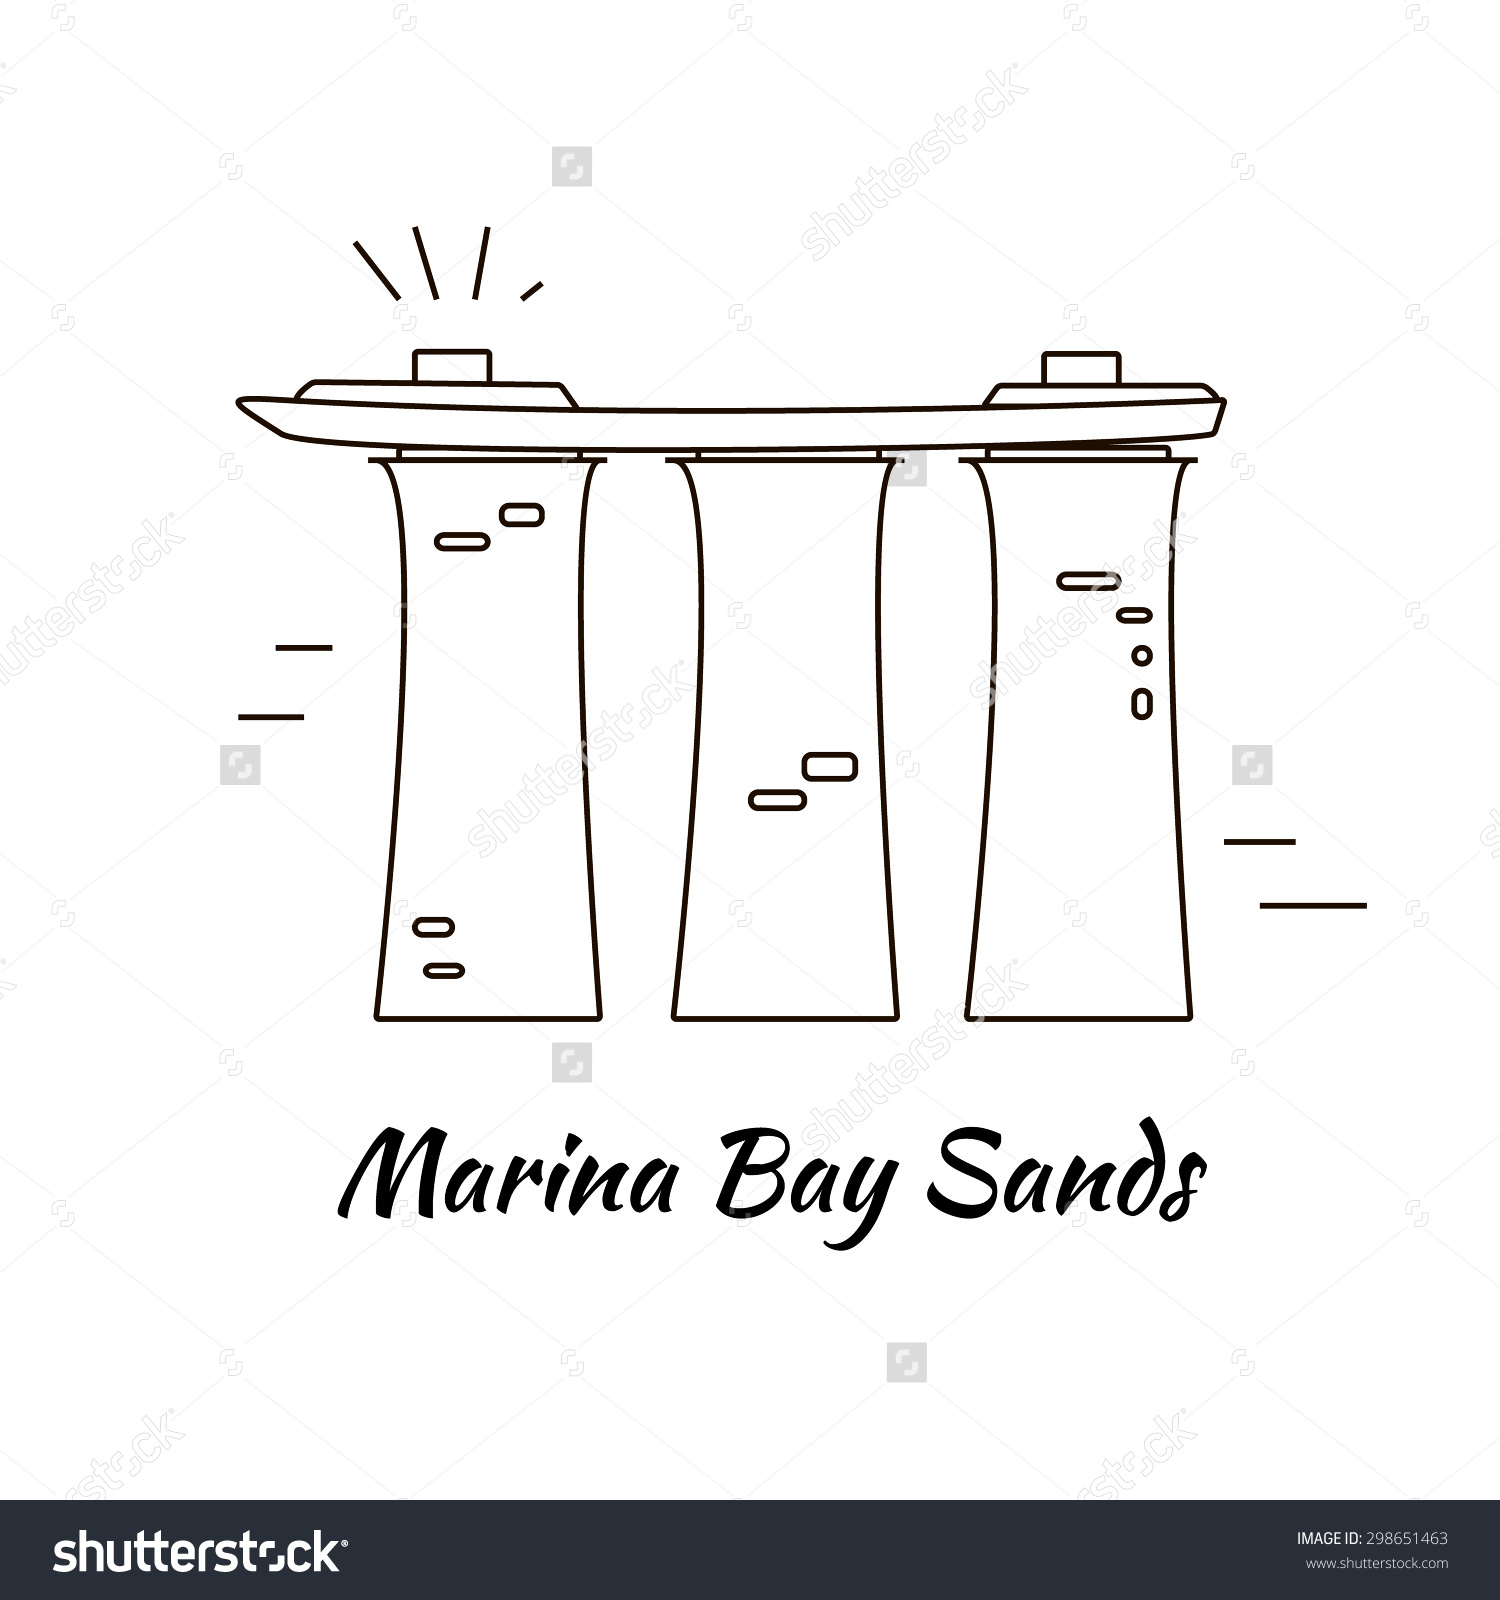 Marina bay sands clipart.